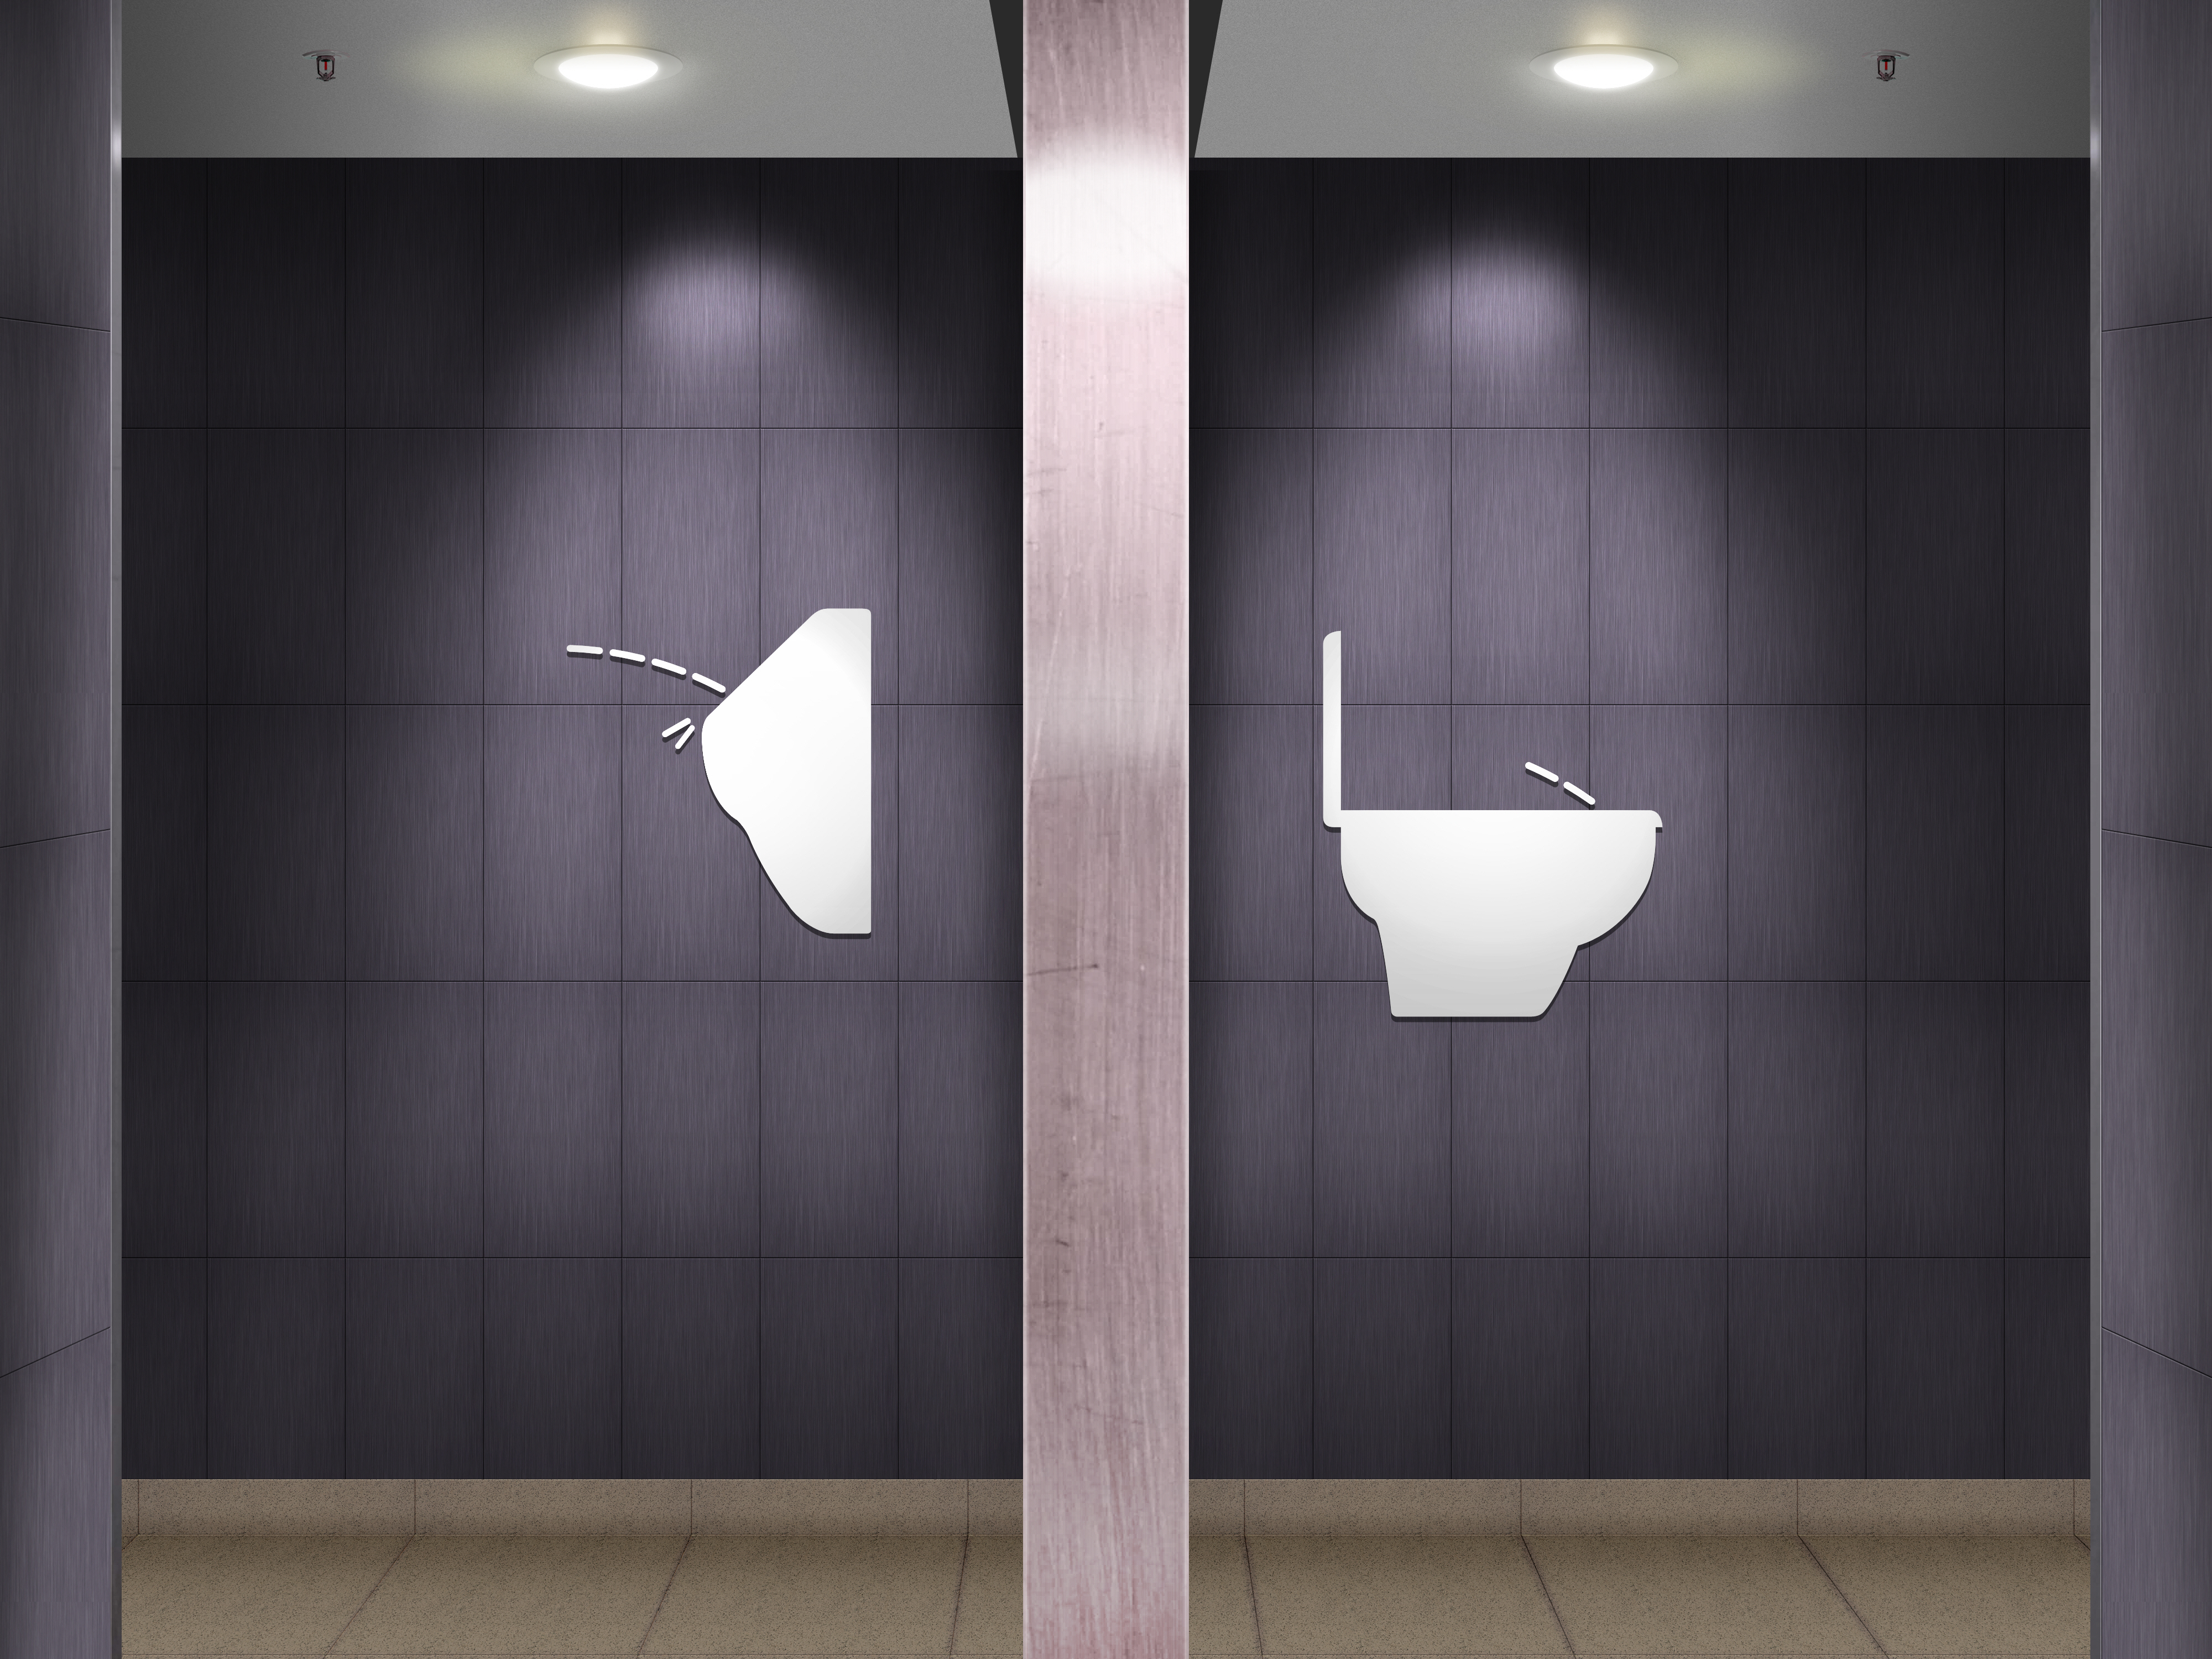 Public Restroom Toilets Pictogram Signs Humor 4000x3000